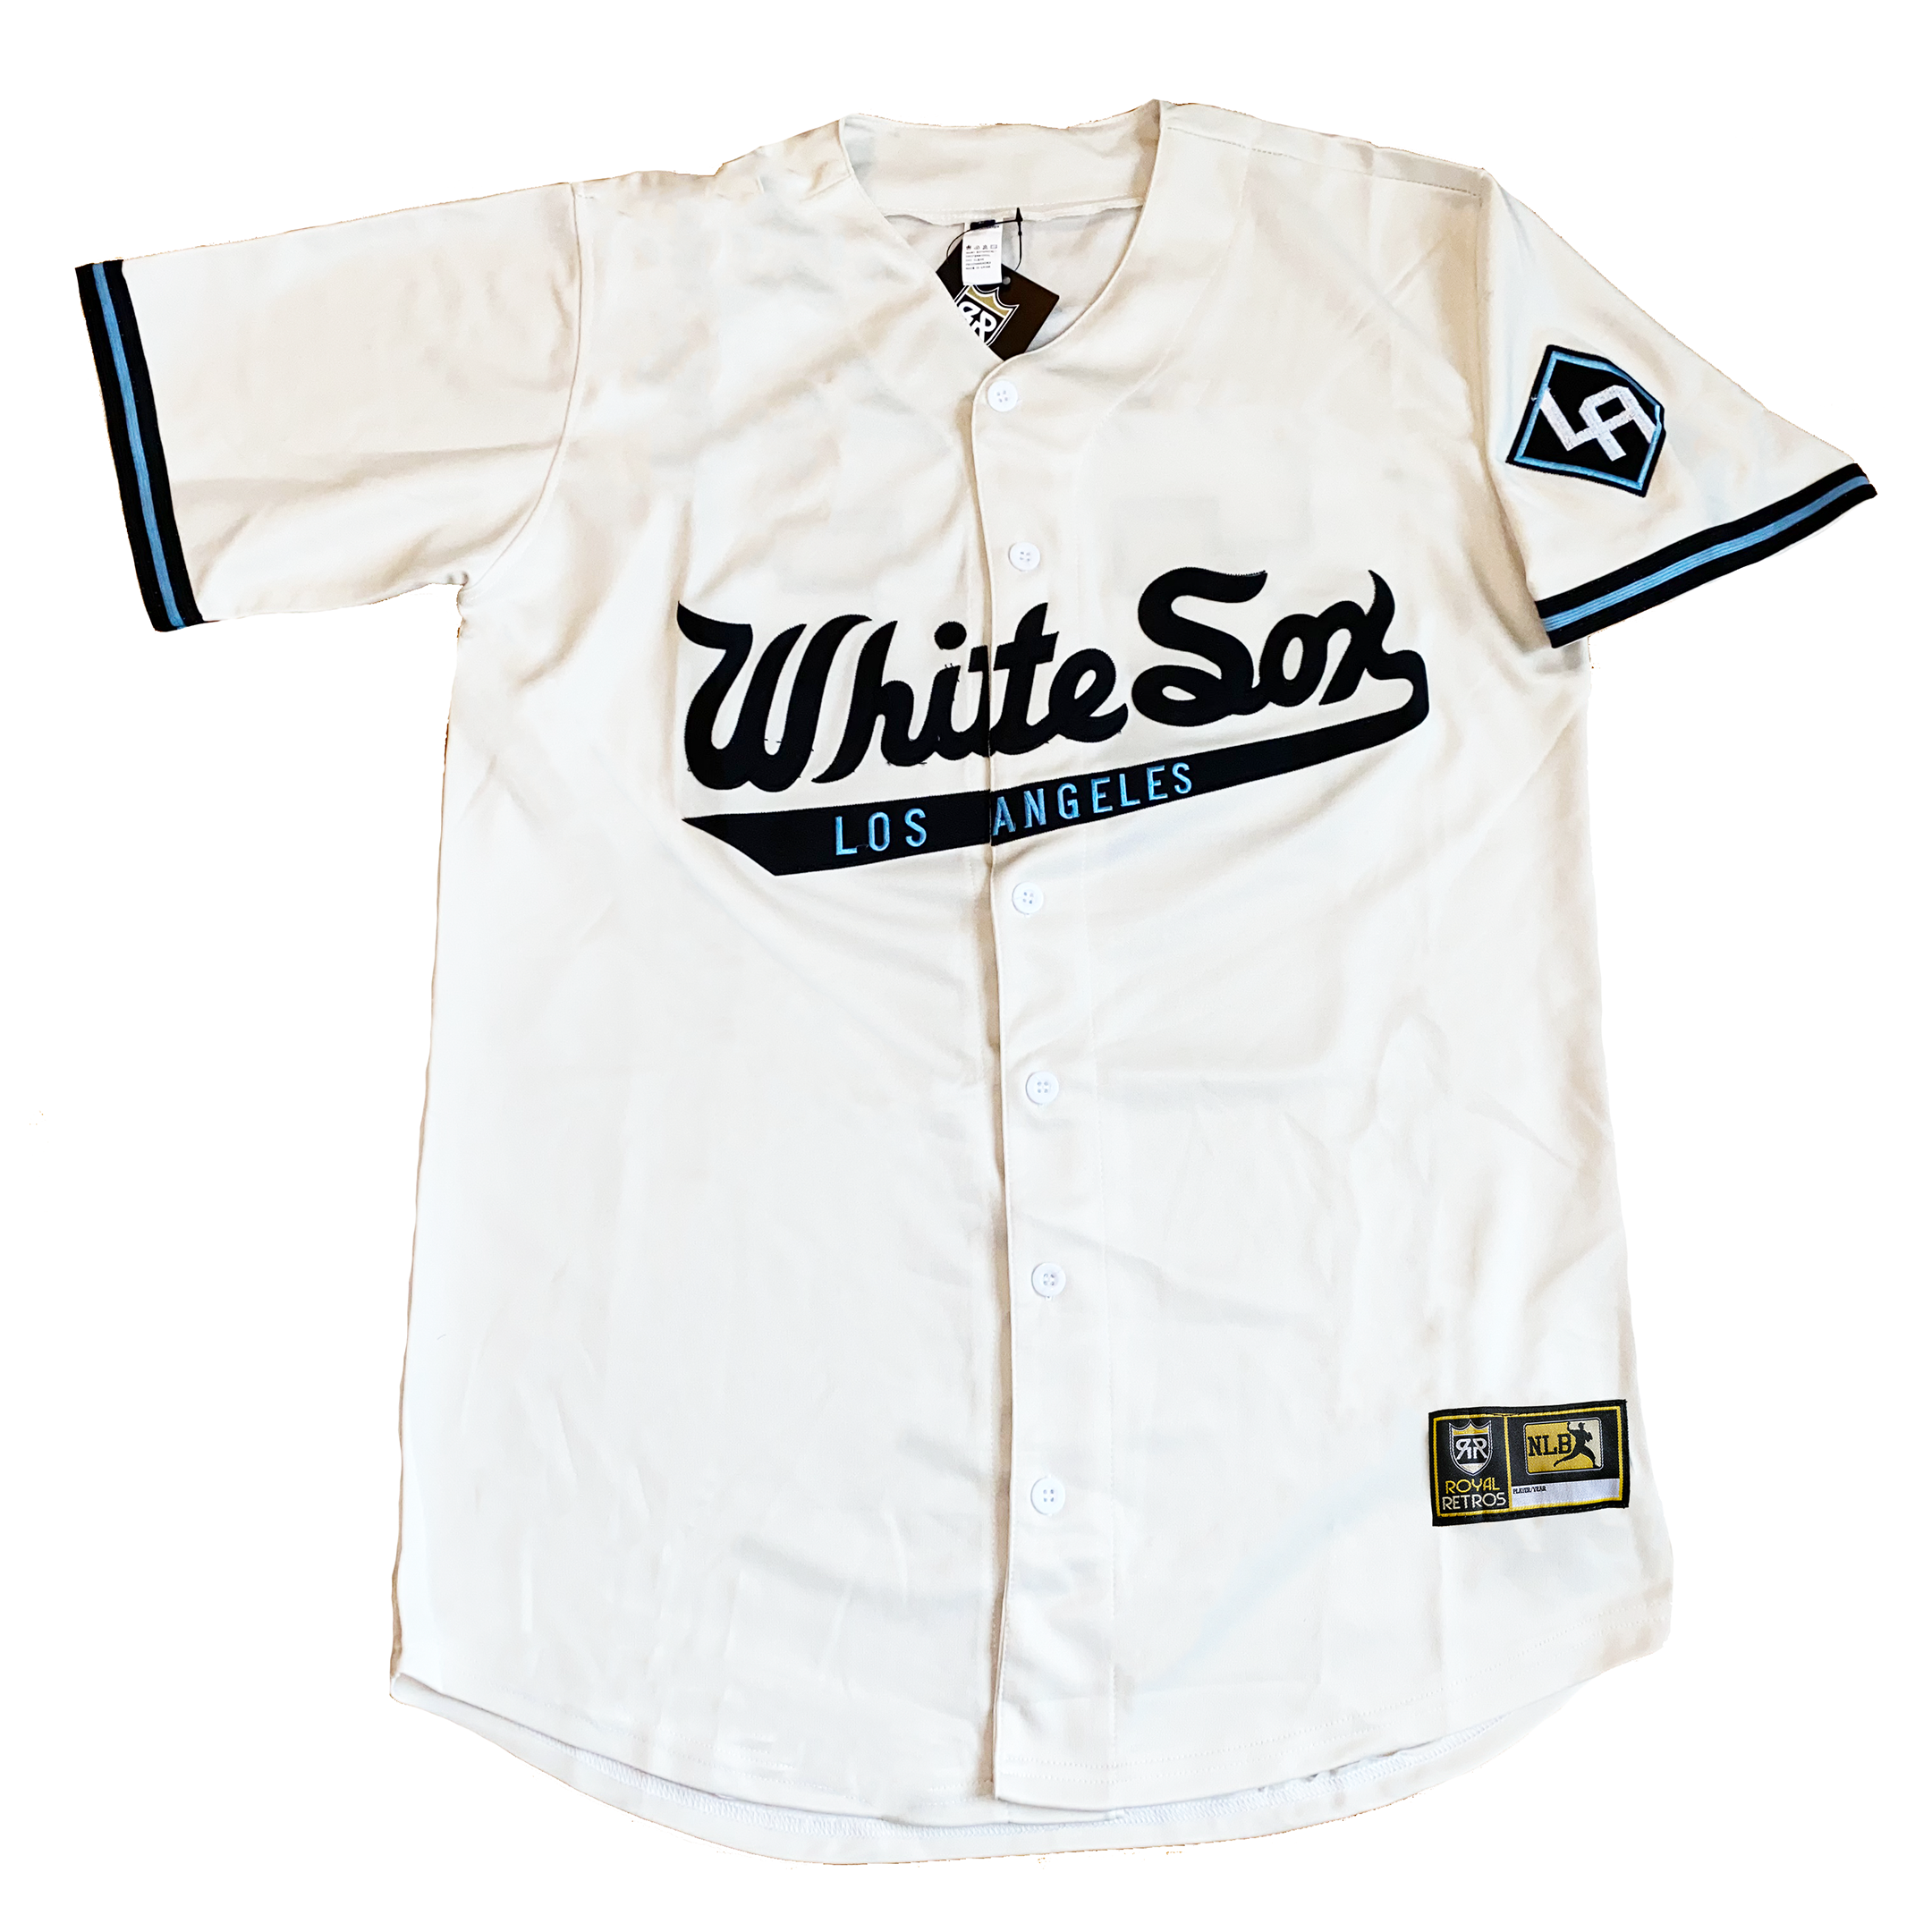 jordan white sox jersey for sale